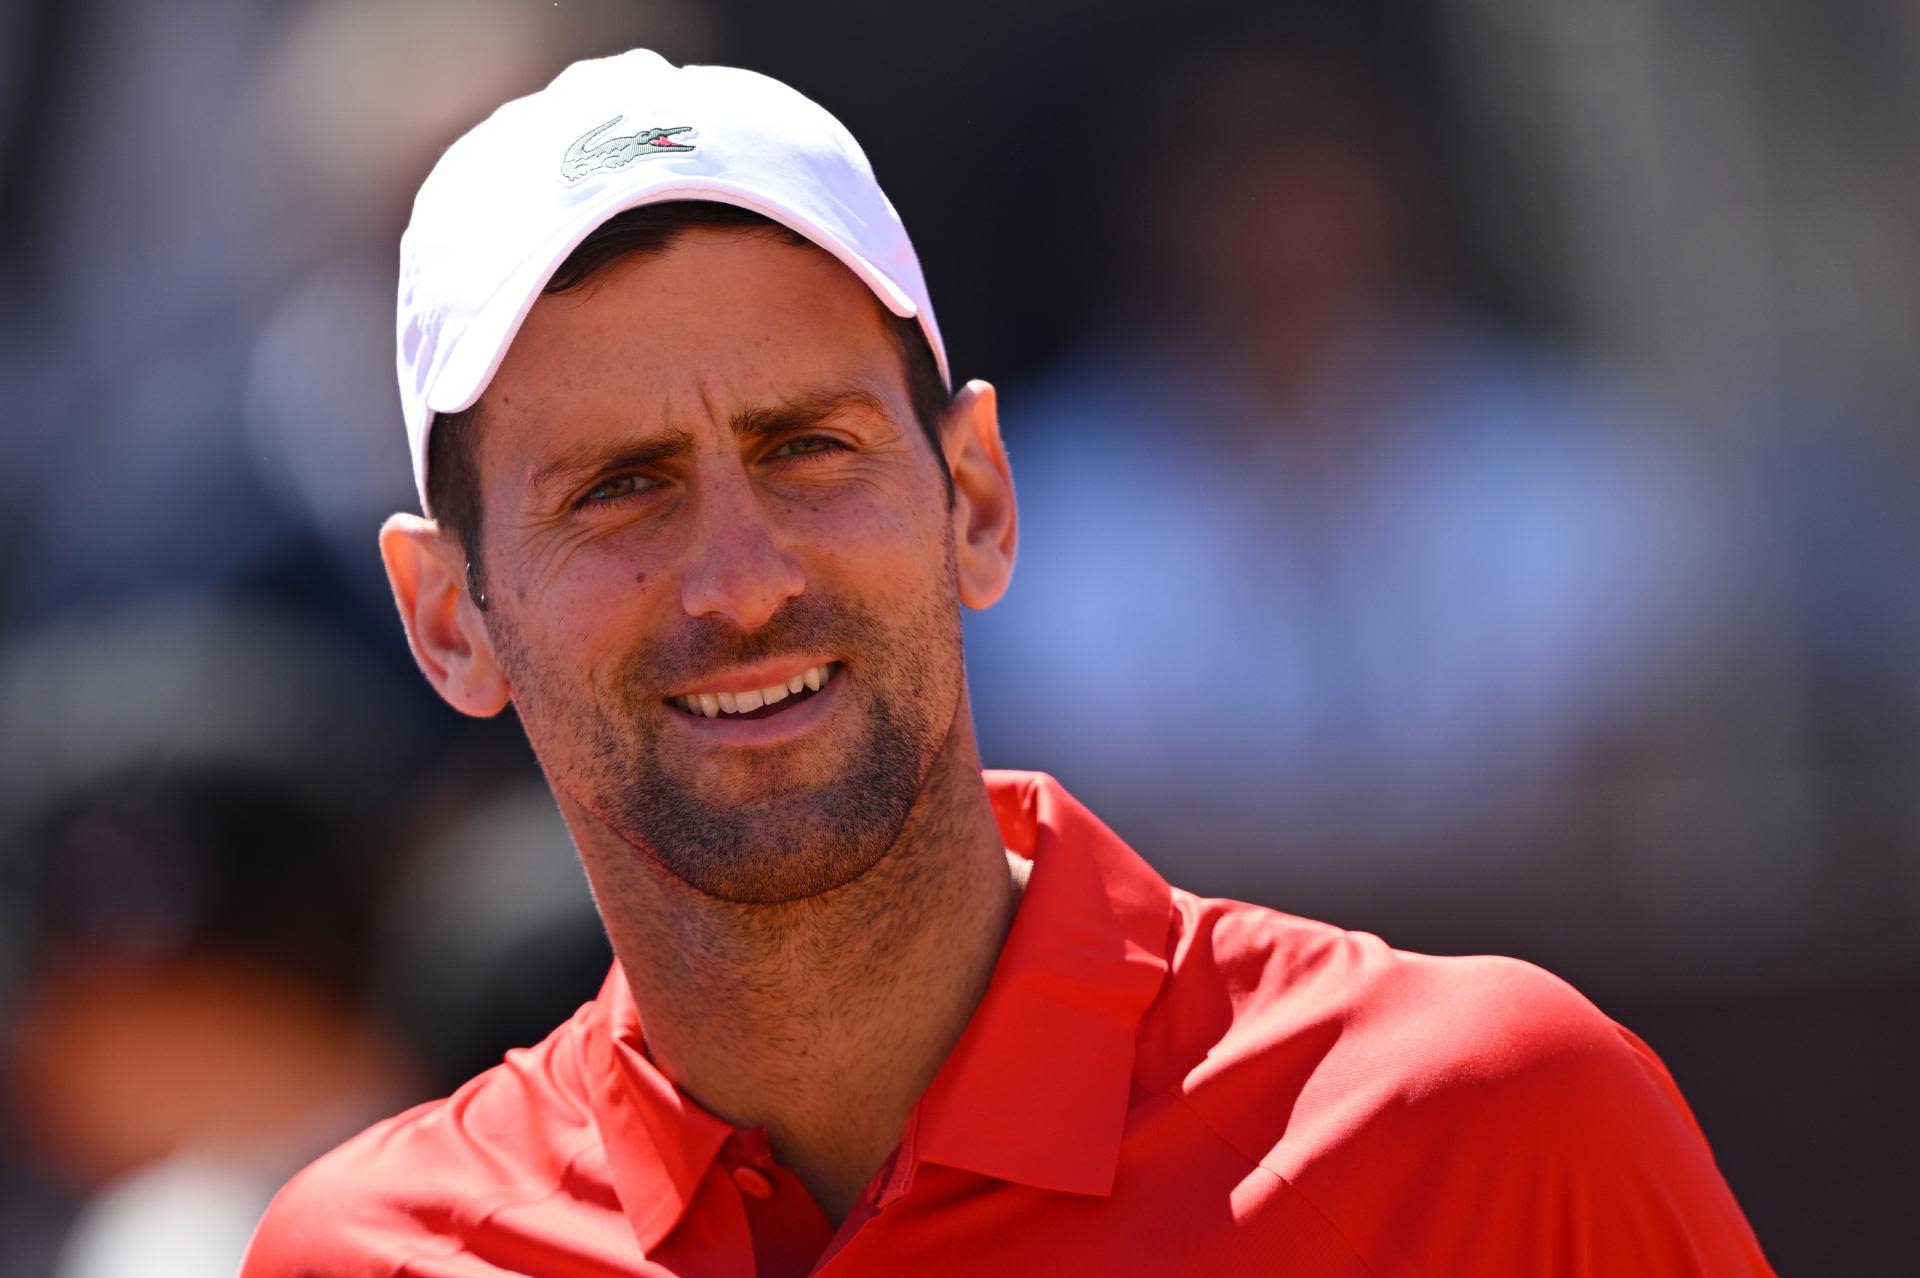 JUST IN: Novak Djokovic undergoes head scan after bottle hit, receives results